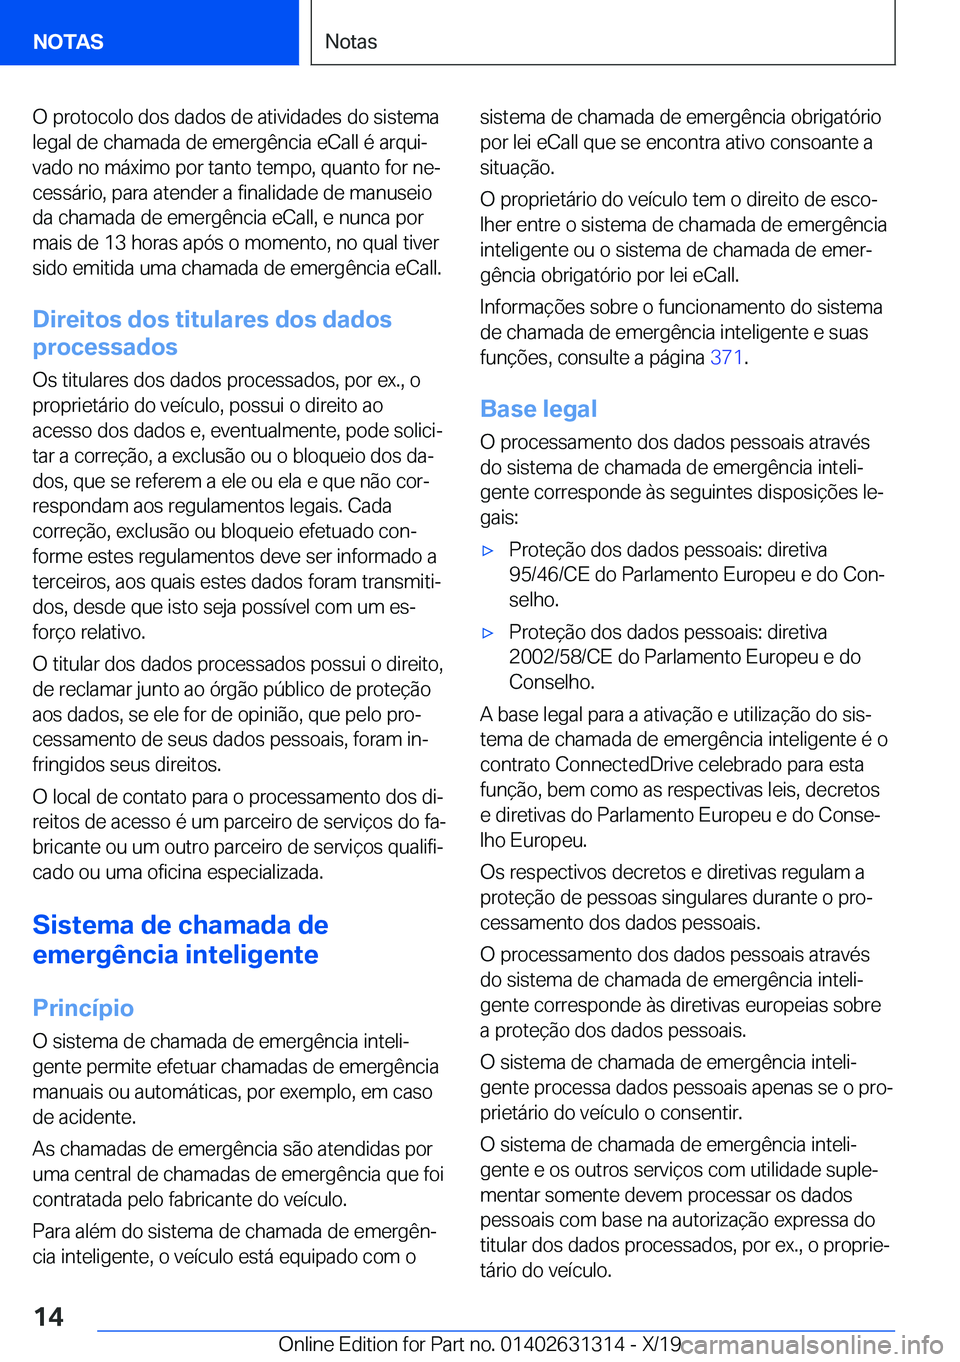 BMW M8 2020  Manual do condutor (in Portuguese) �O��p�r�o�t�o�c�o�l�o��d�o�s��d�a�d�o�s��d�e��a�t�i�v�i�d�a�d�e�s��d�o��s�i�s�t�e�m�a�l�e�g�a�l��d�e��c�h�a�m�a�d�a��d�e��e�m�e�r�g�ê�n�c�i�a��e�C�a�l�l��é��a�r�q�u�iª
�v�a�d�o��n�o